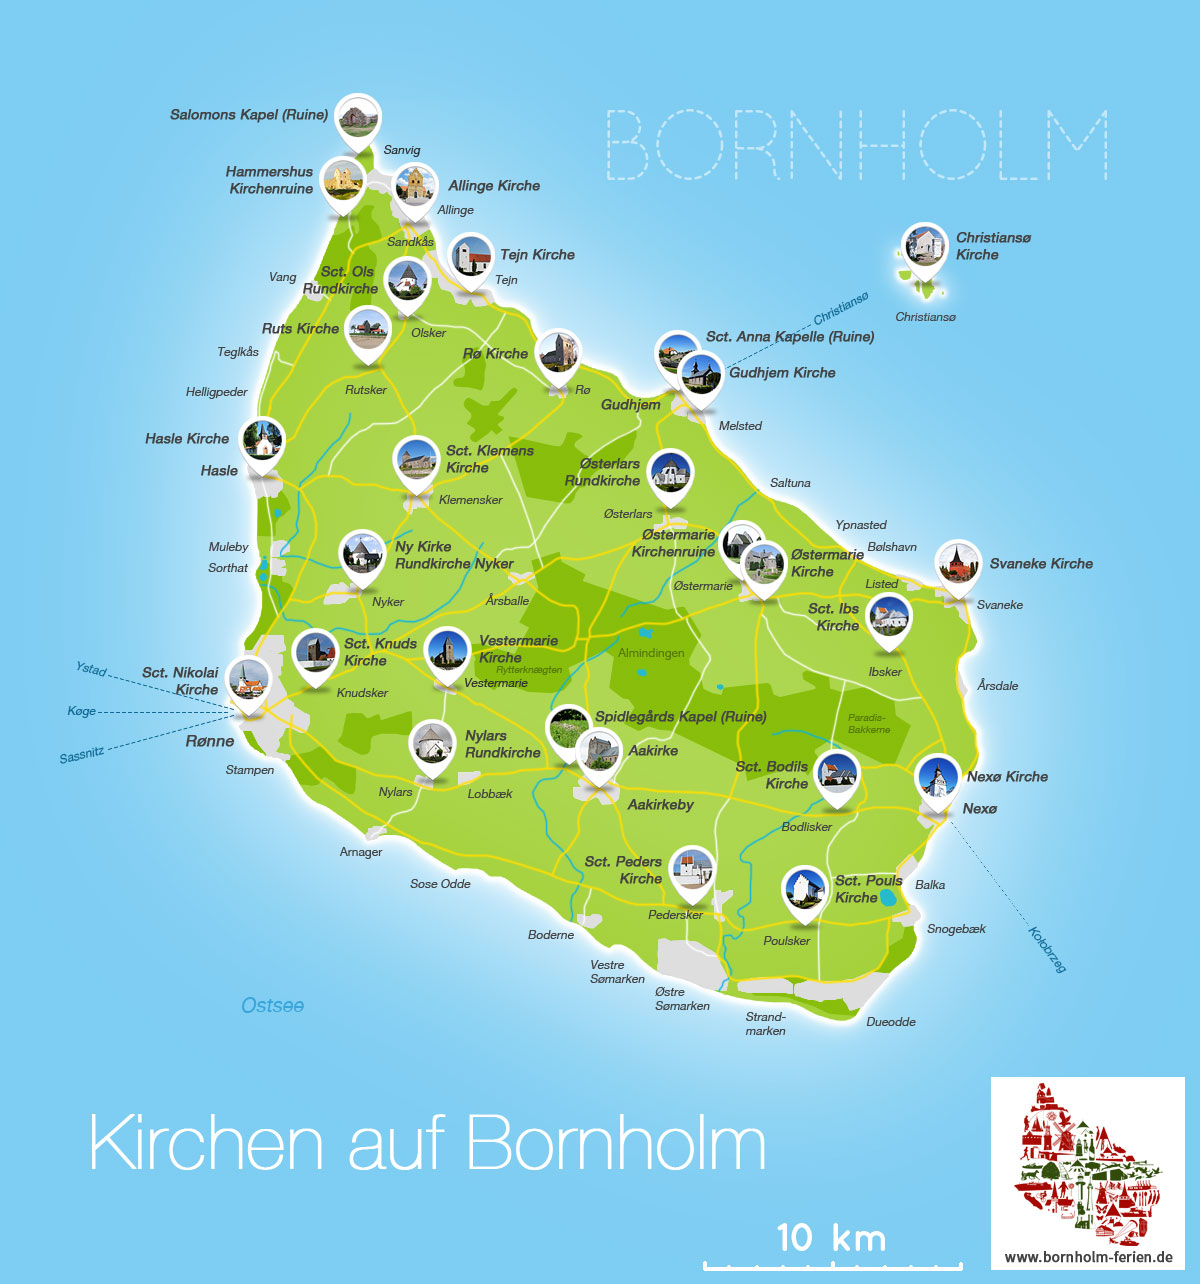 Kirchen Insel Bornholm (Dänemark) - Alle Bornholmer Kirchen & Kapellen